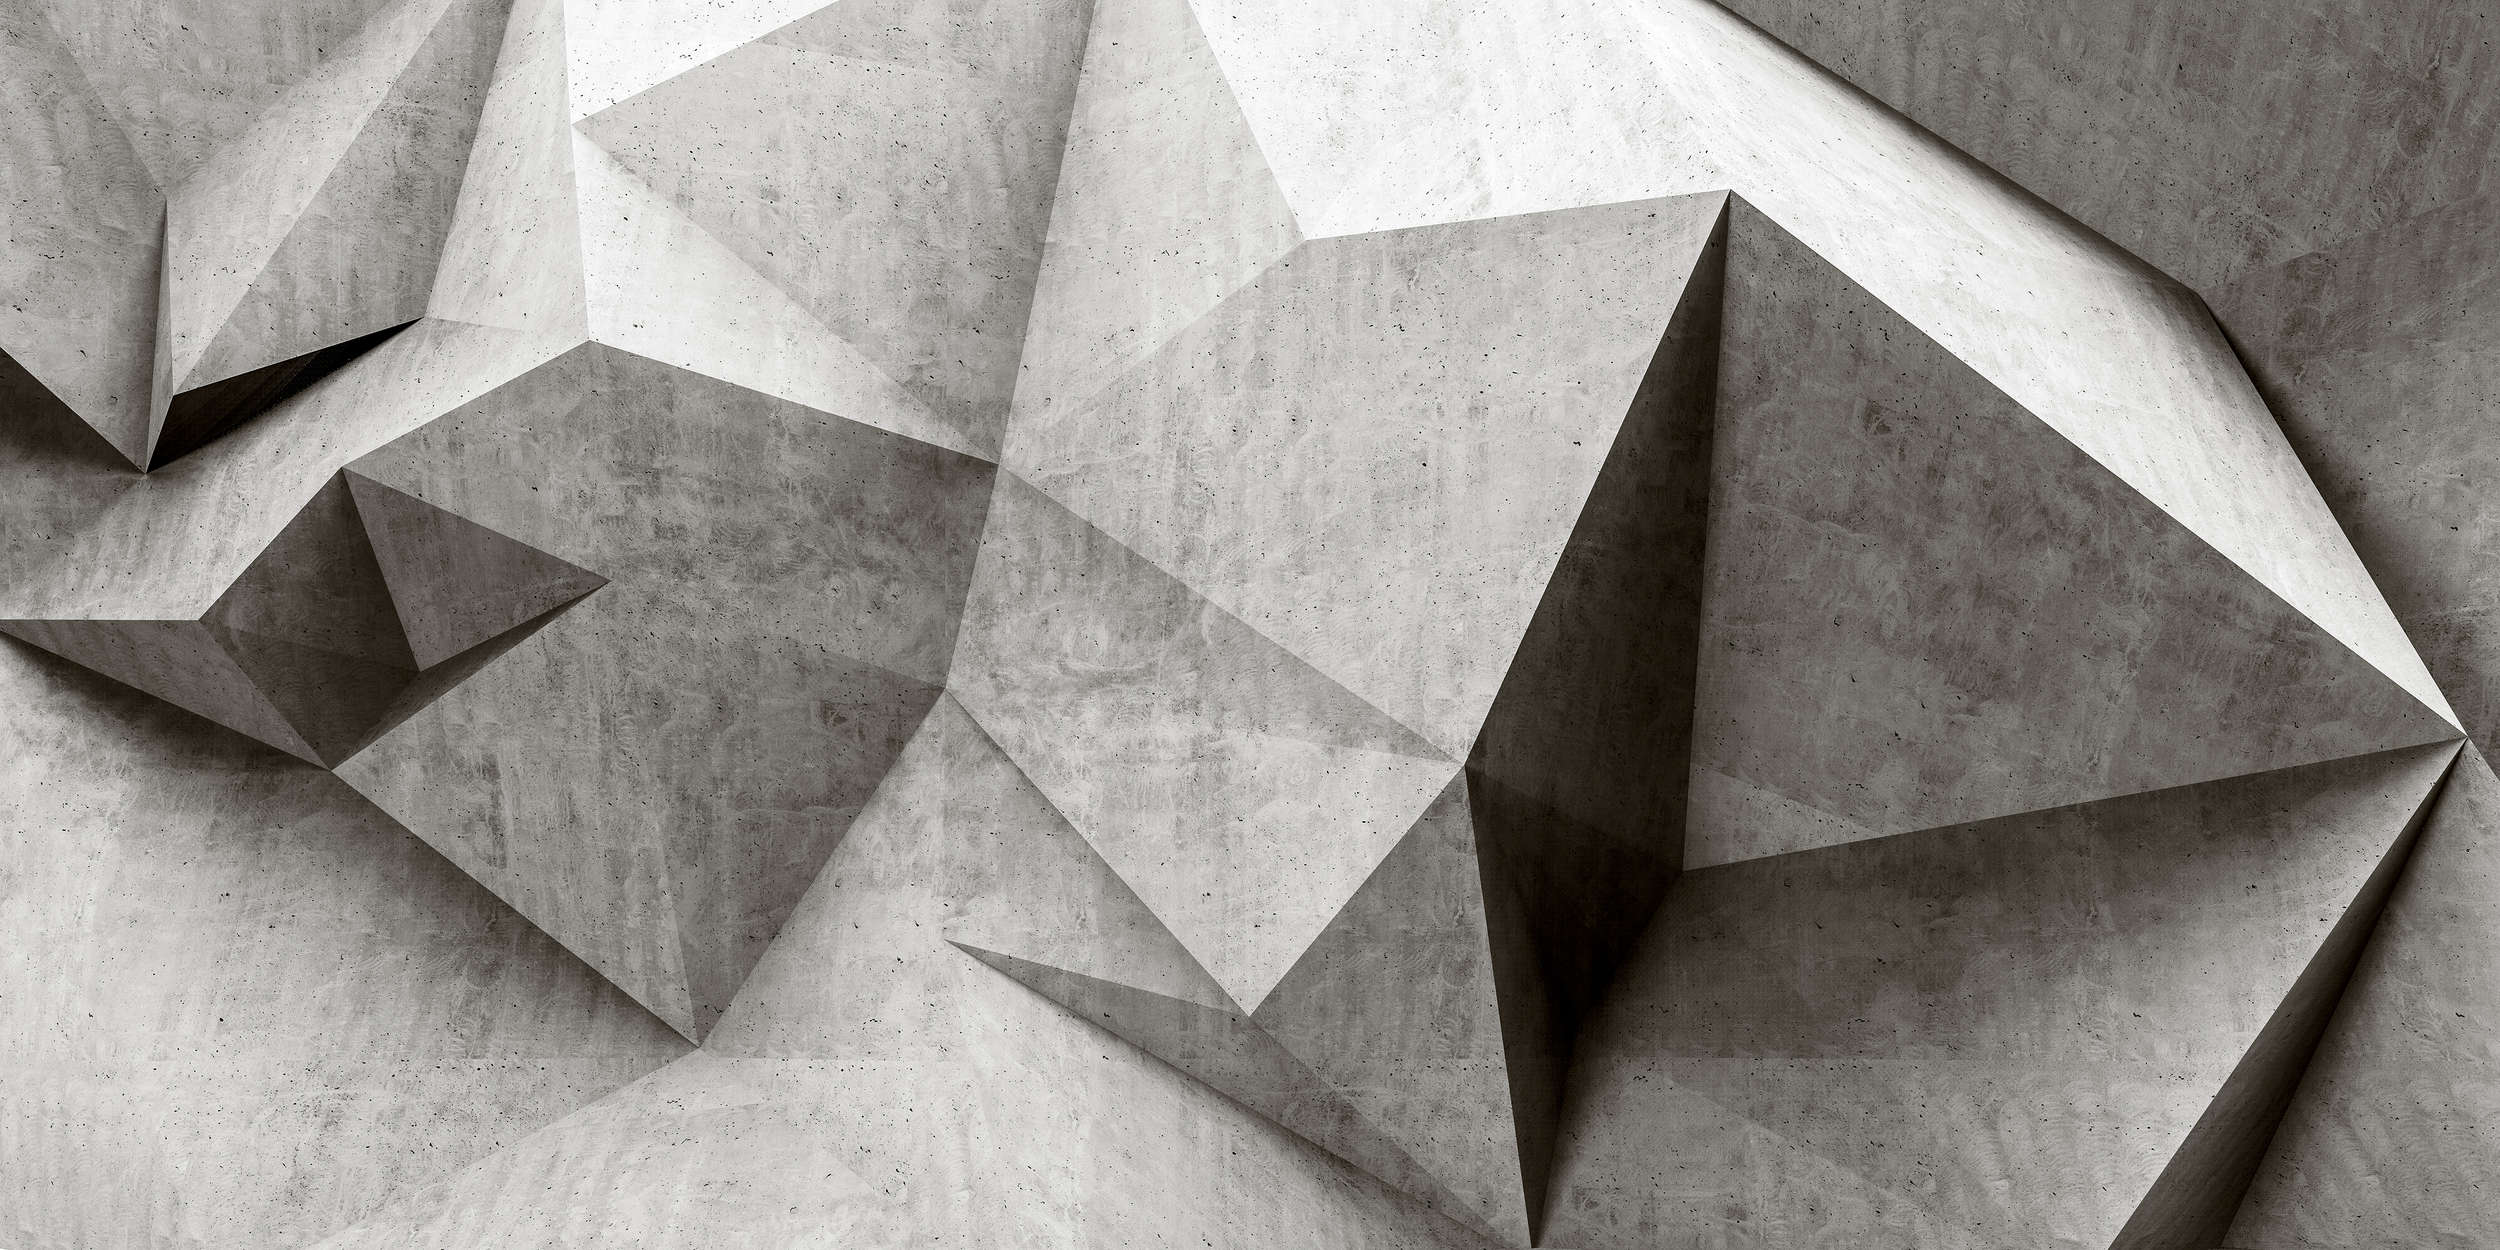             Boulder 1 - Coole 3D Beton-Polygone Fototapete – Grau, Schwarz | Perlmutt Glattvlies
        